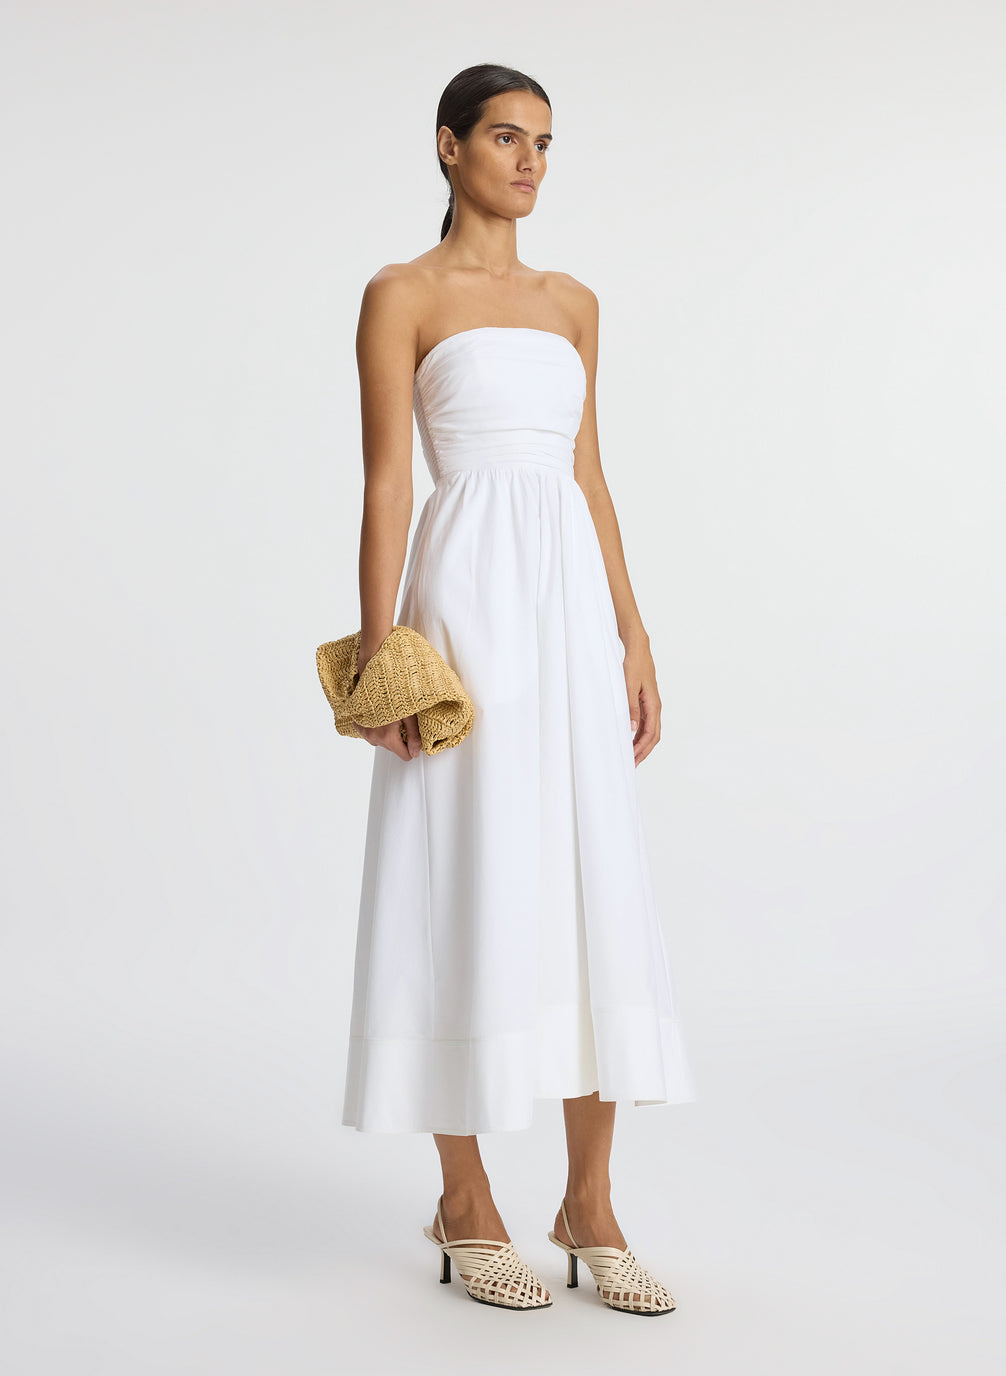 side view of woman wearing white strapless midi dress